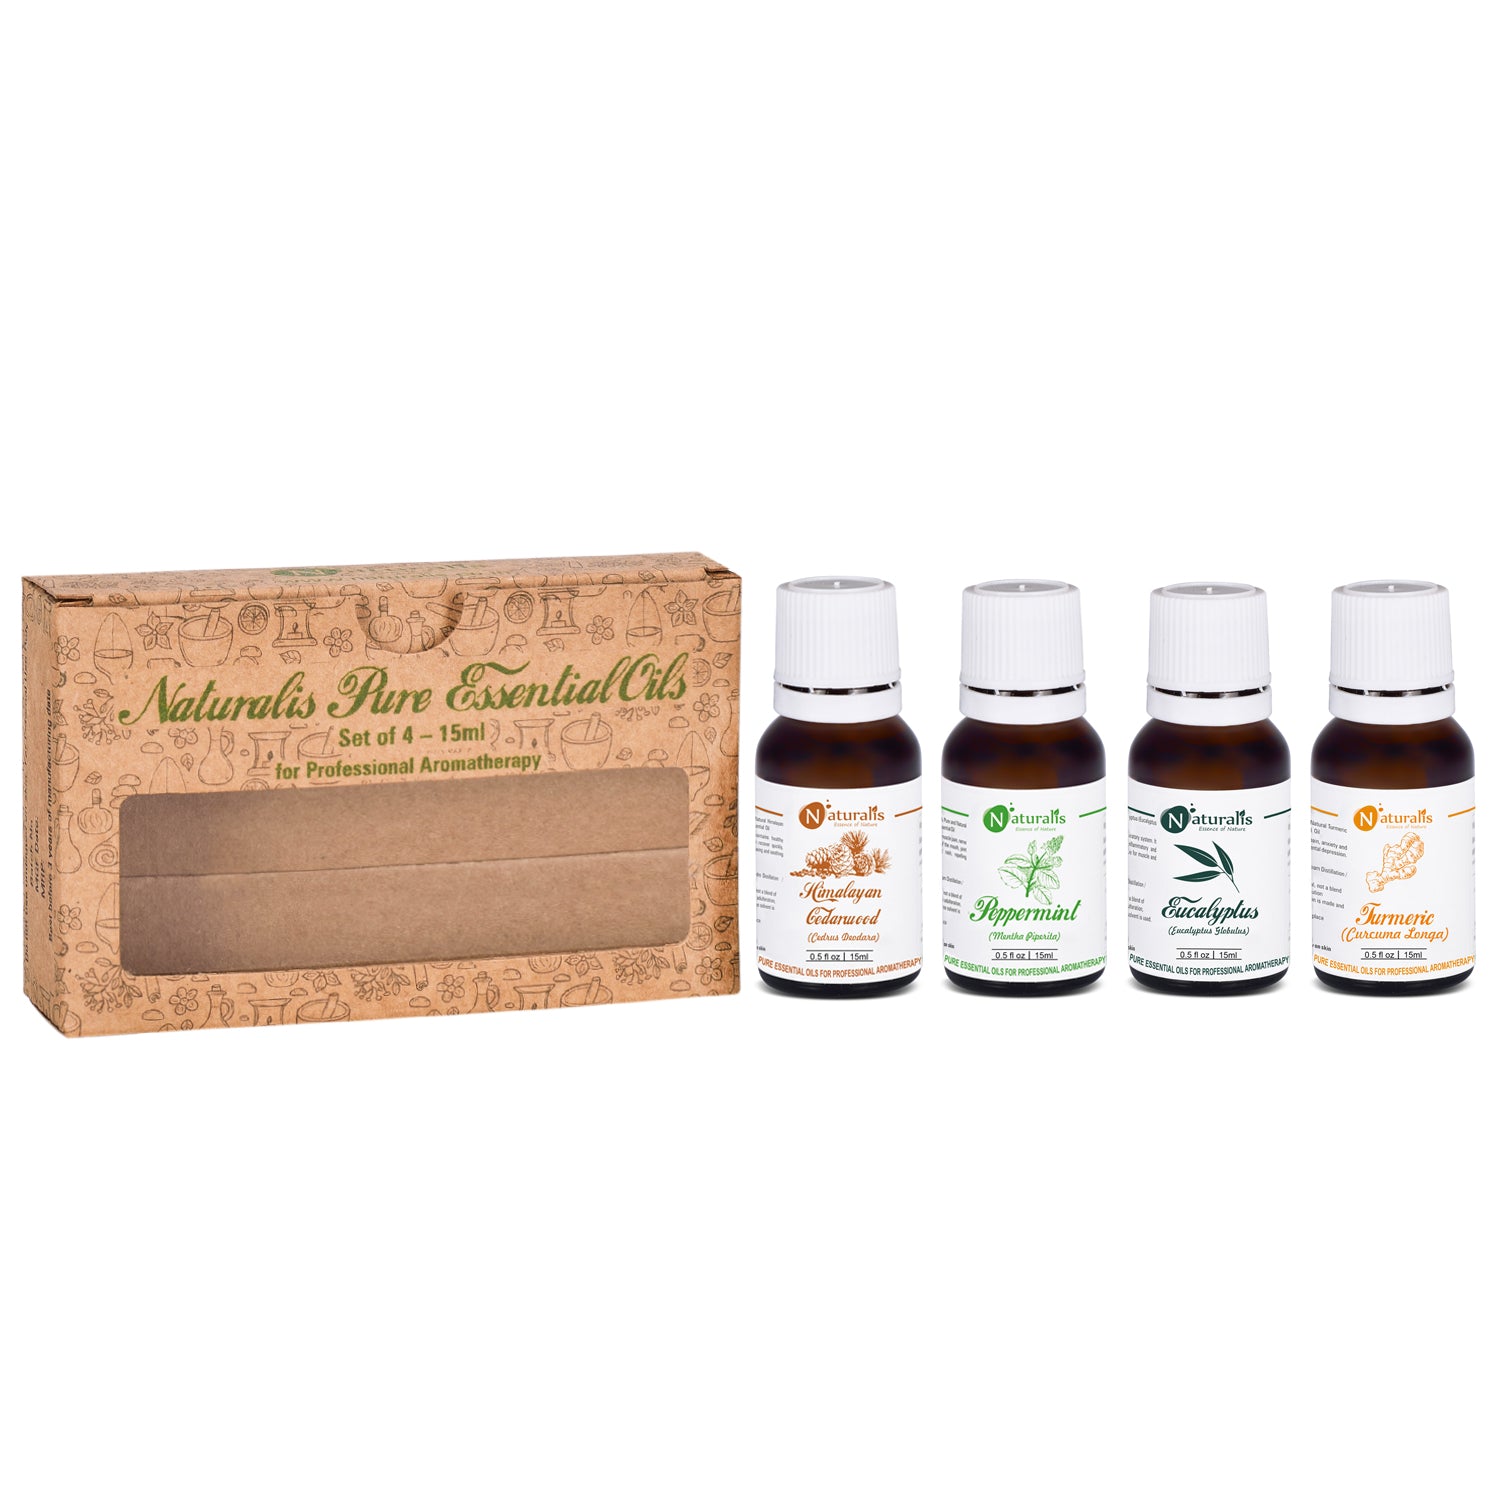 Naturalis 15ml Essential Oil Gift Pack Of 4 for Health Care (Cedarwood Oil, Peppermint Oil, Eucalyptus Oil, Turmeric Oil) - Naturalis